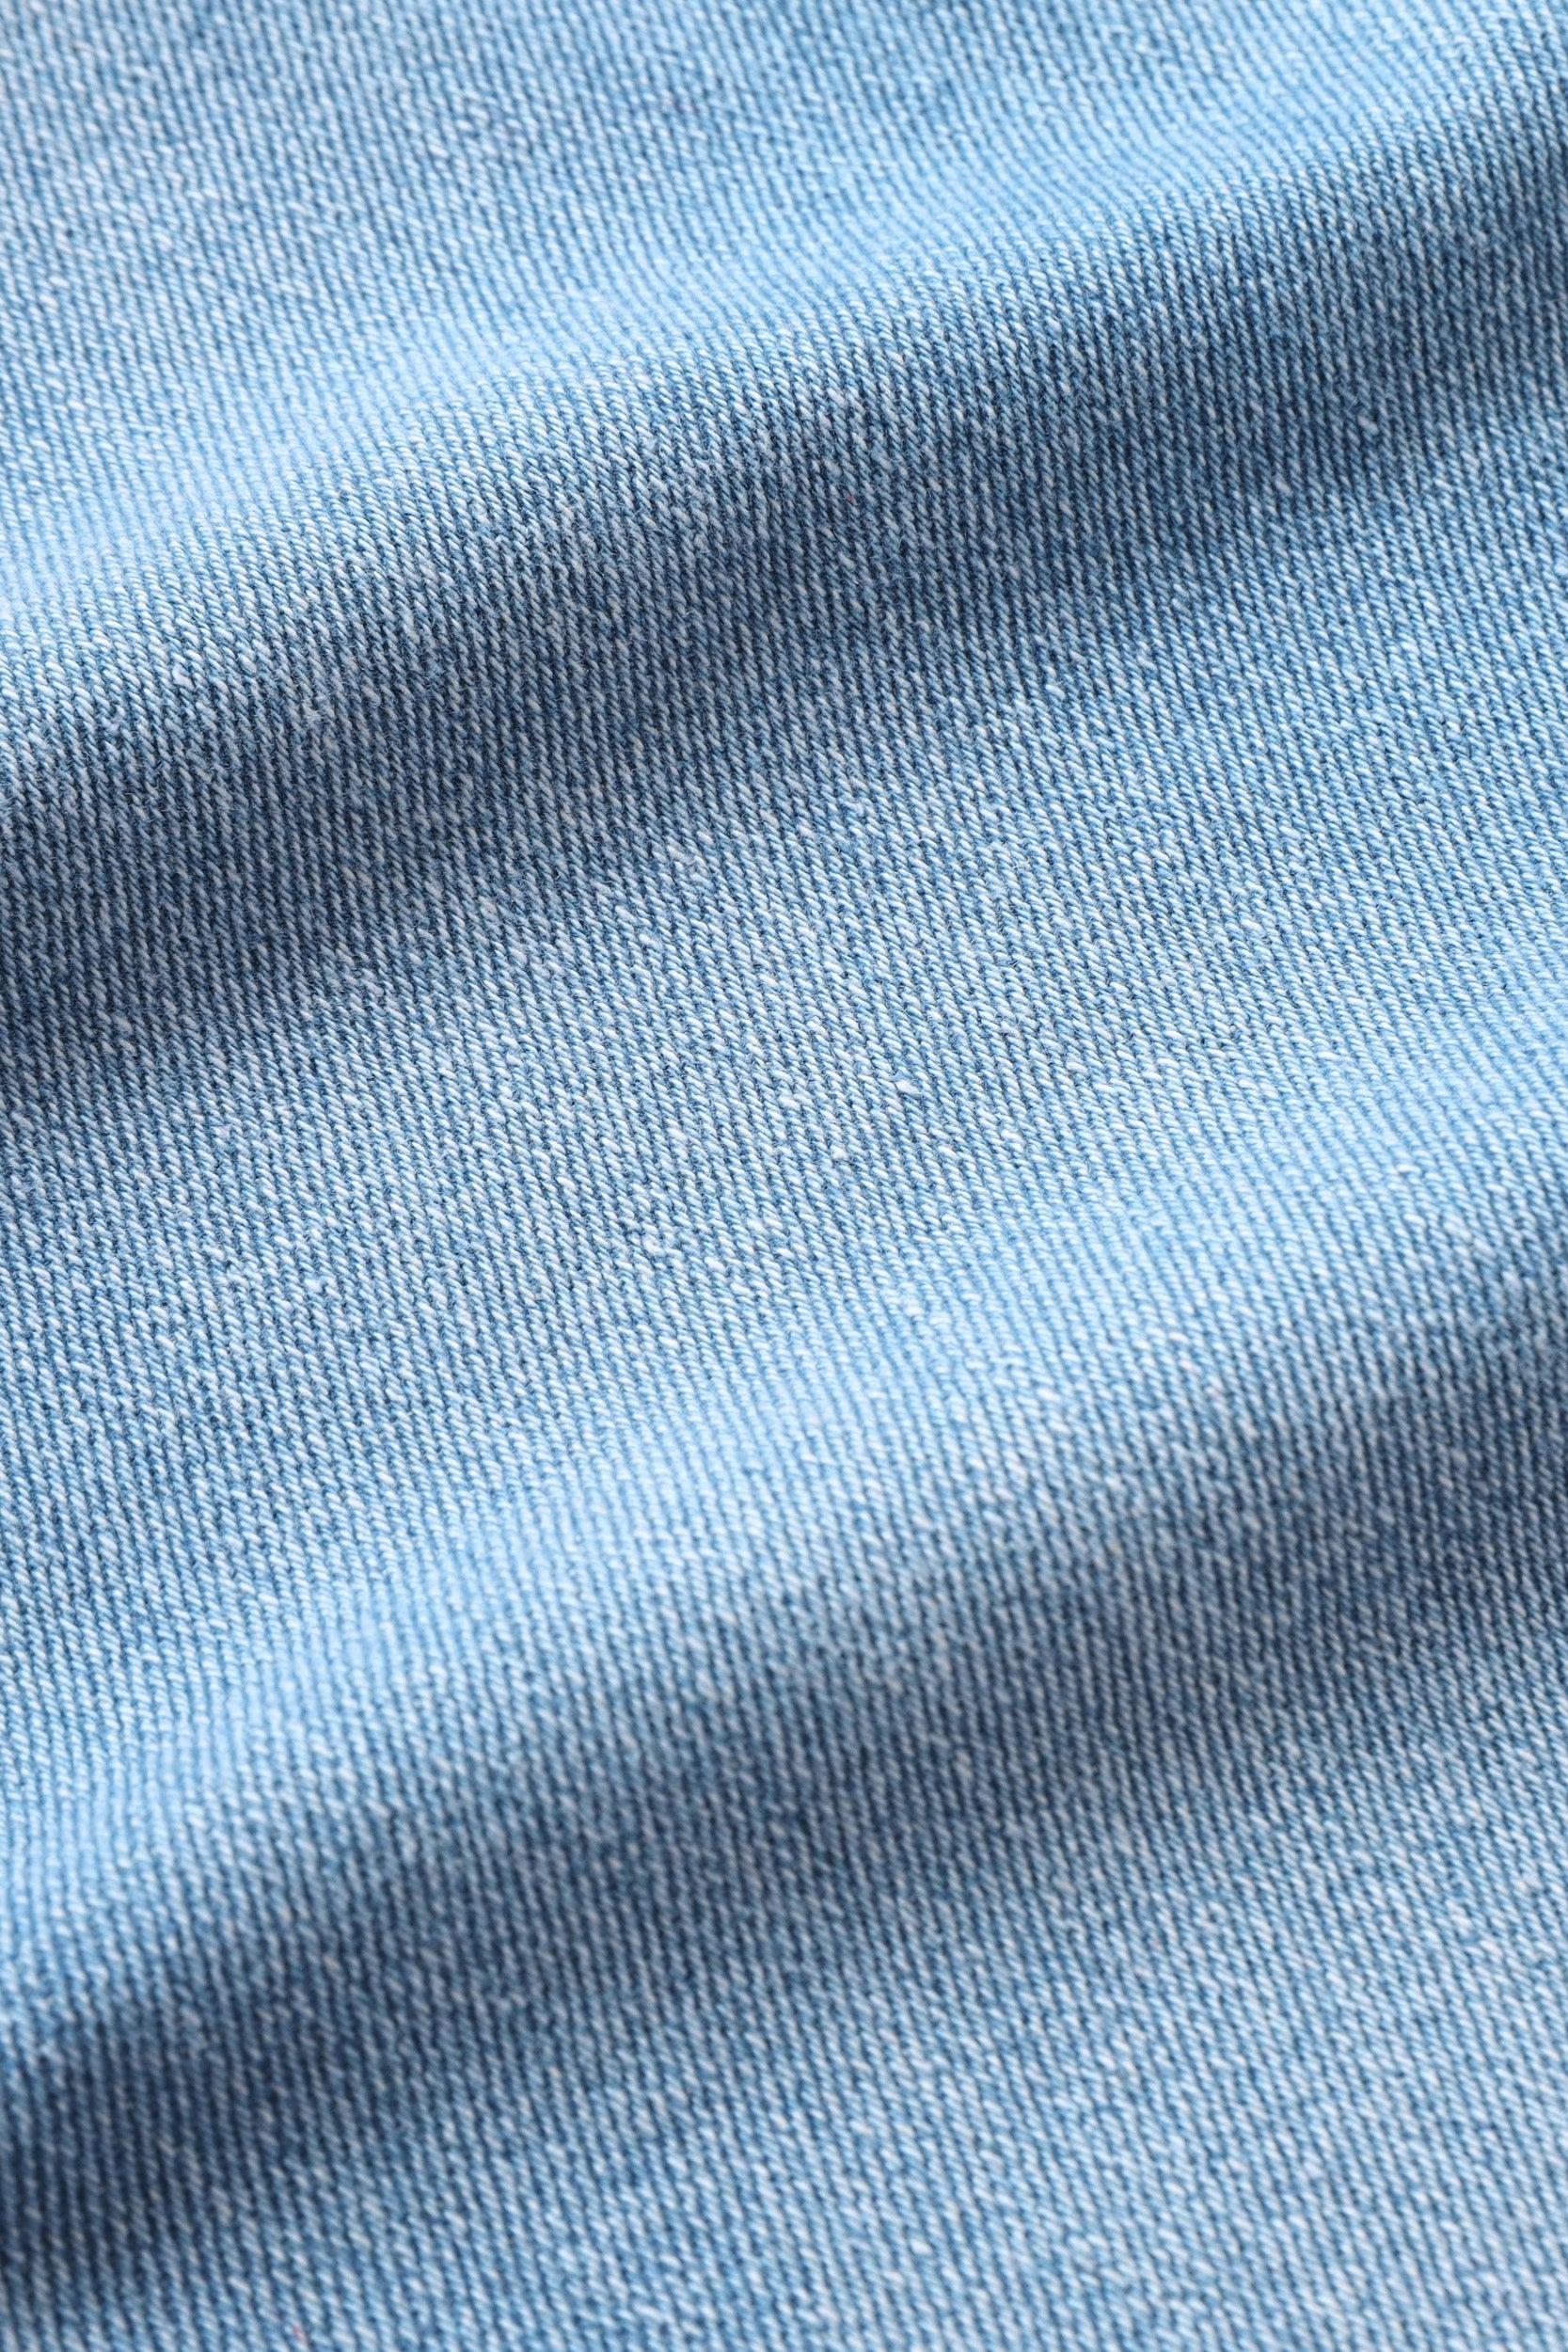 Stylish denim cloth with seams · Free Stock Photo